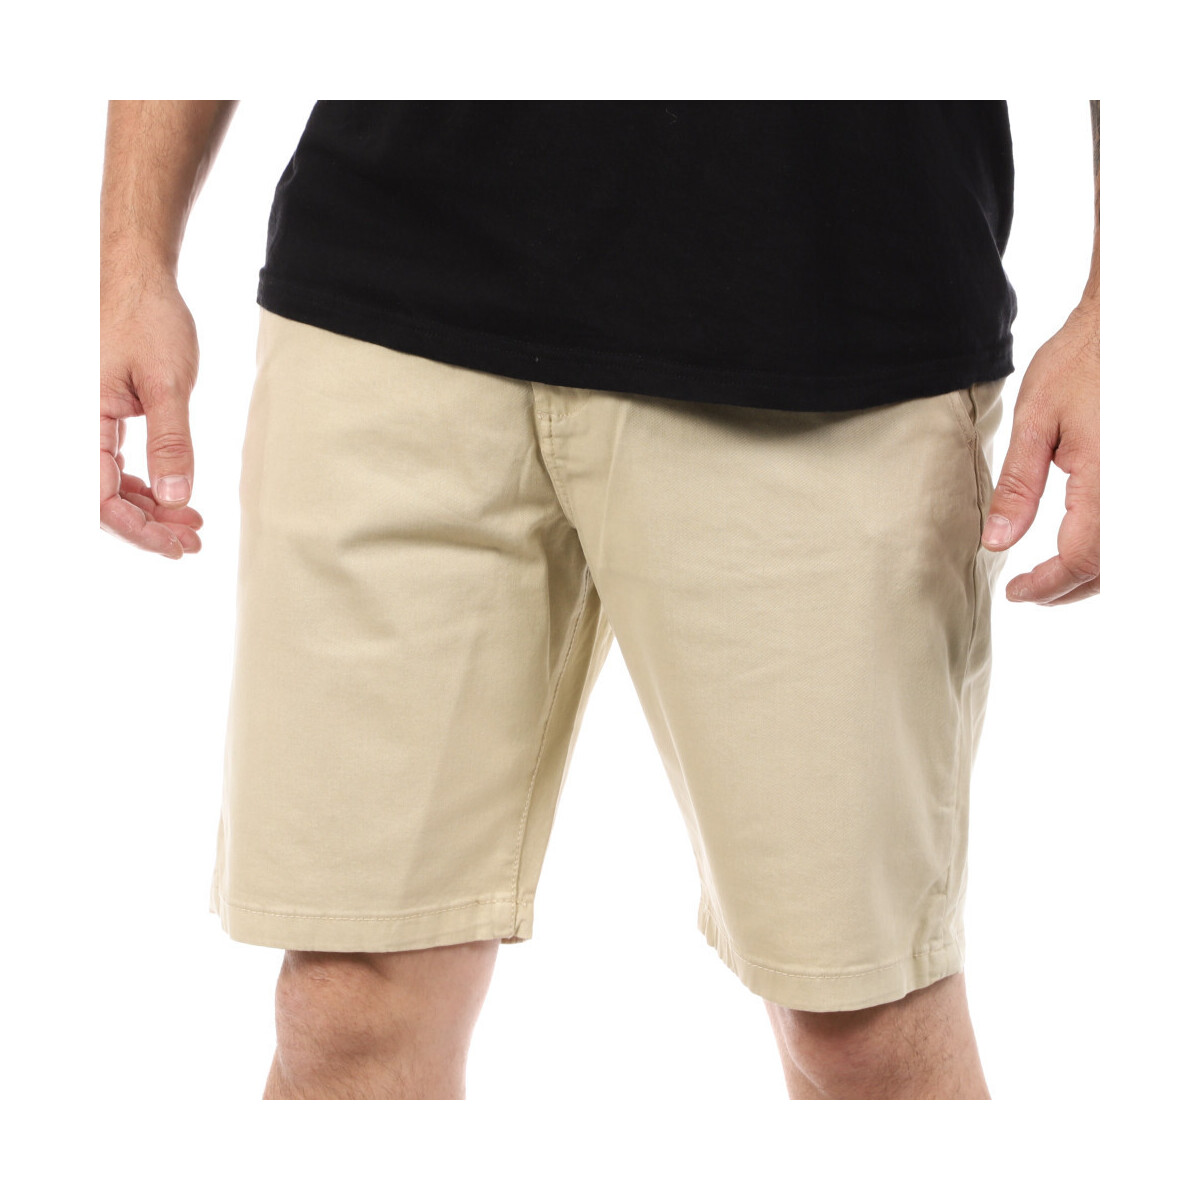 Vêtements Homme Shorts / Bermudas Lee Cooper LEE-008979 Beige